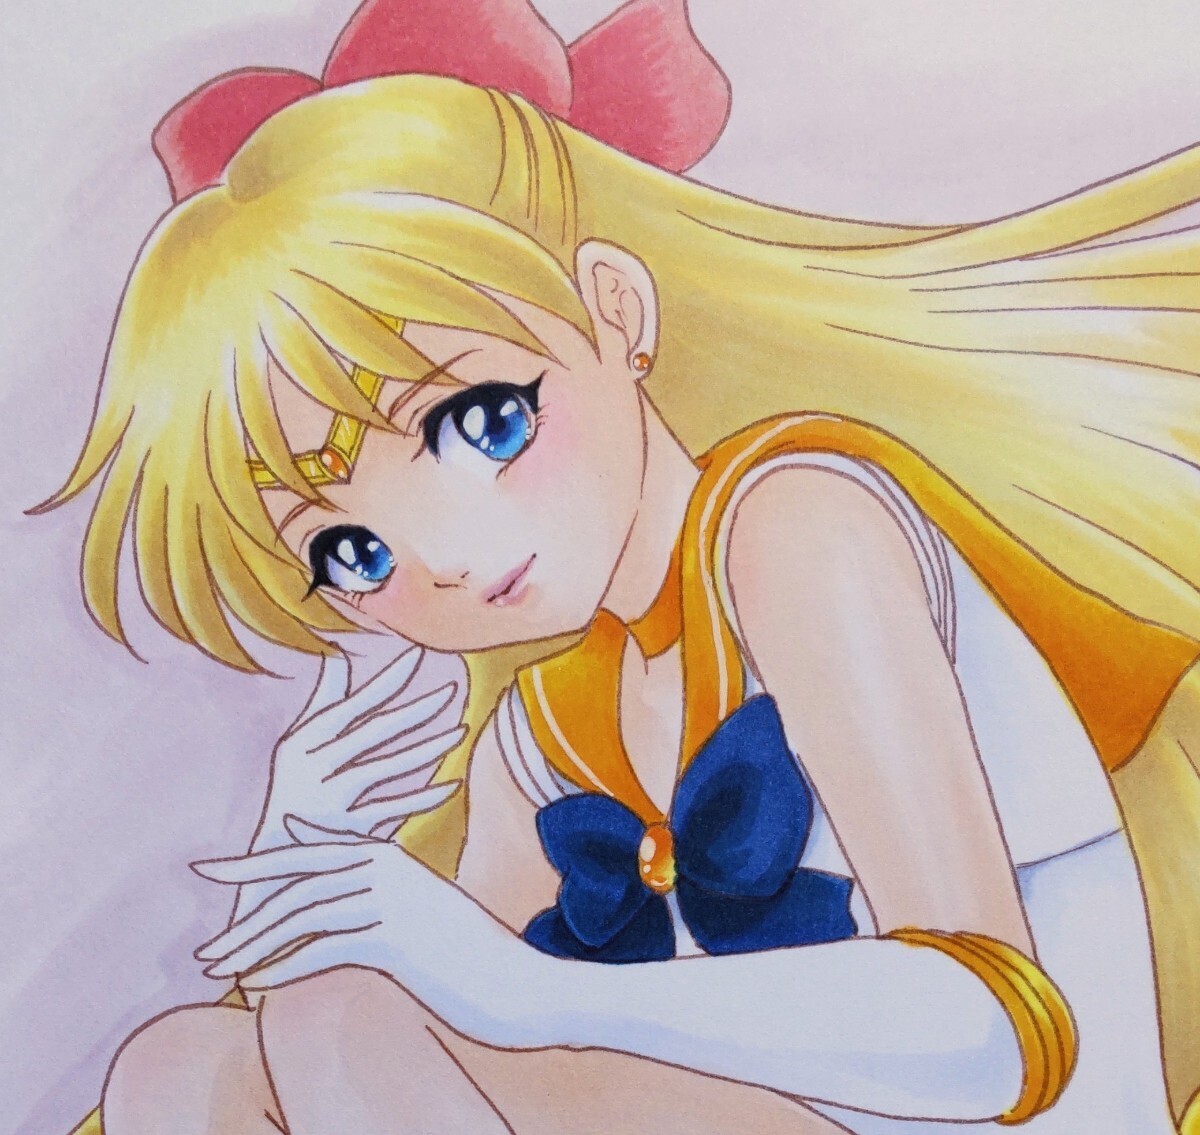 رسم توضيحي مرسوم باليد ☆ Pretty Guardian Sailor Moon ☆ Sailor Venus ☆ Minako Aino ☆ حجم B5, كاريكاتير, سلع الانمي, رسم توضيحي مرسومة باليد